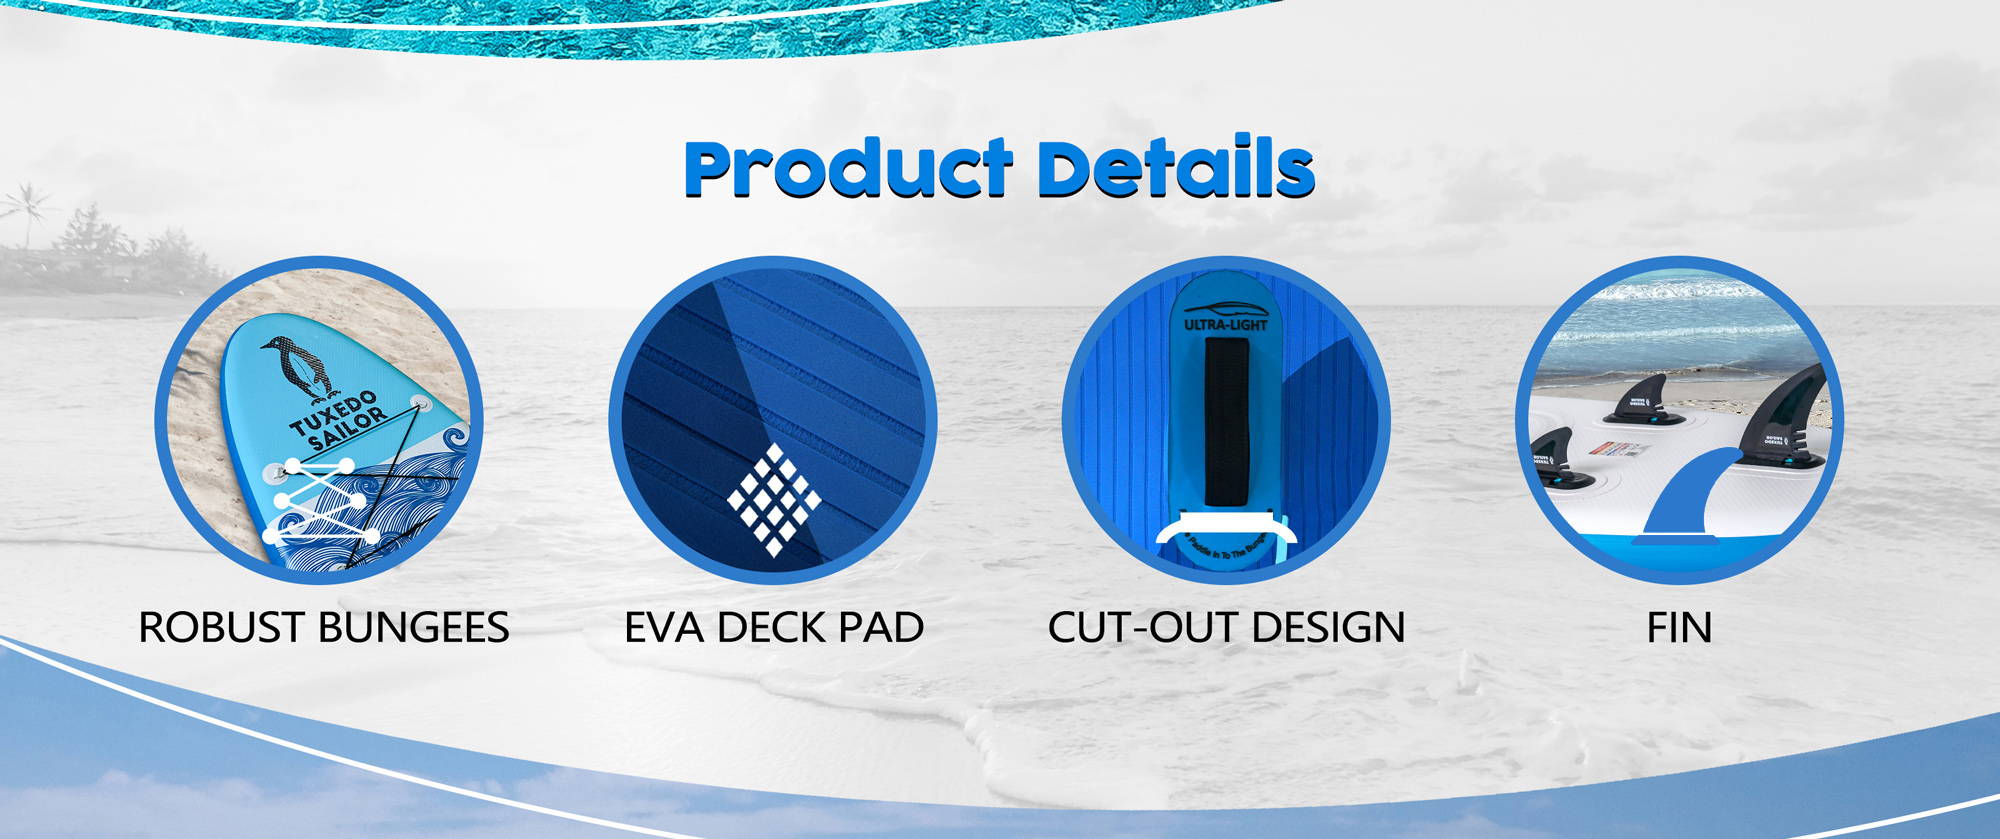 rocket paddle board product details